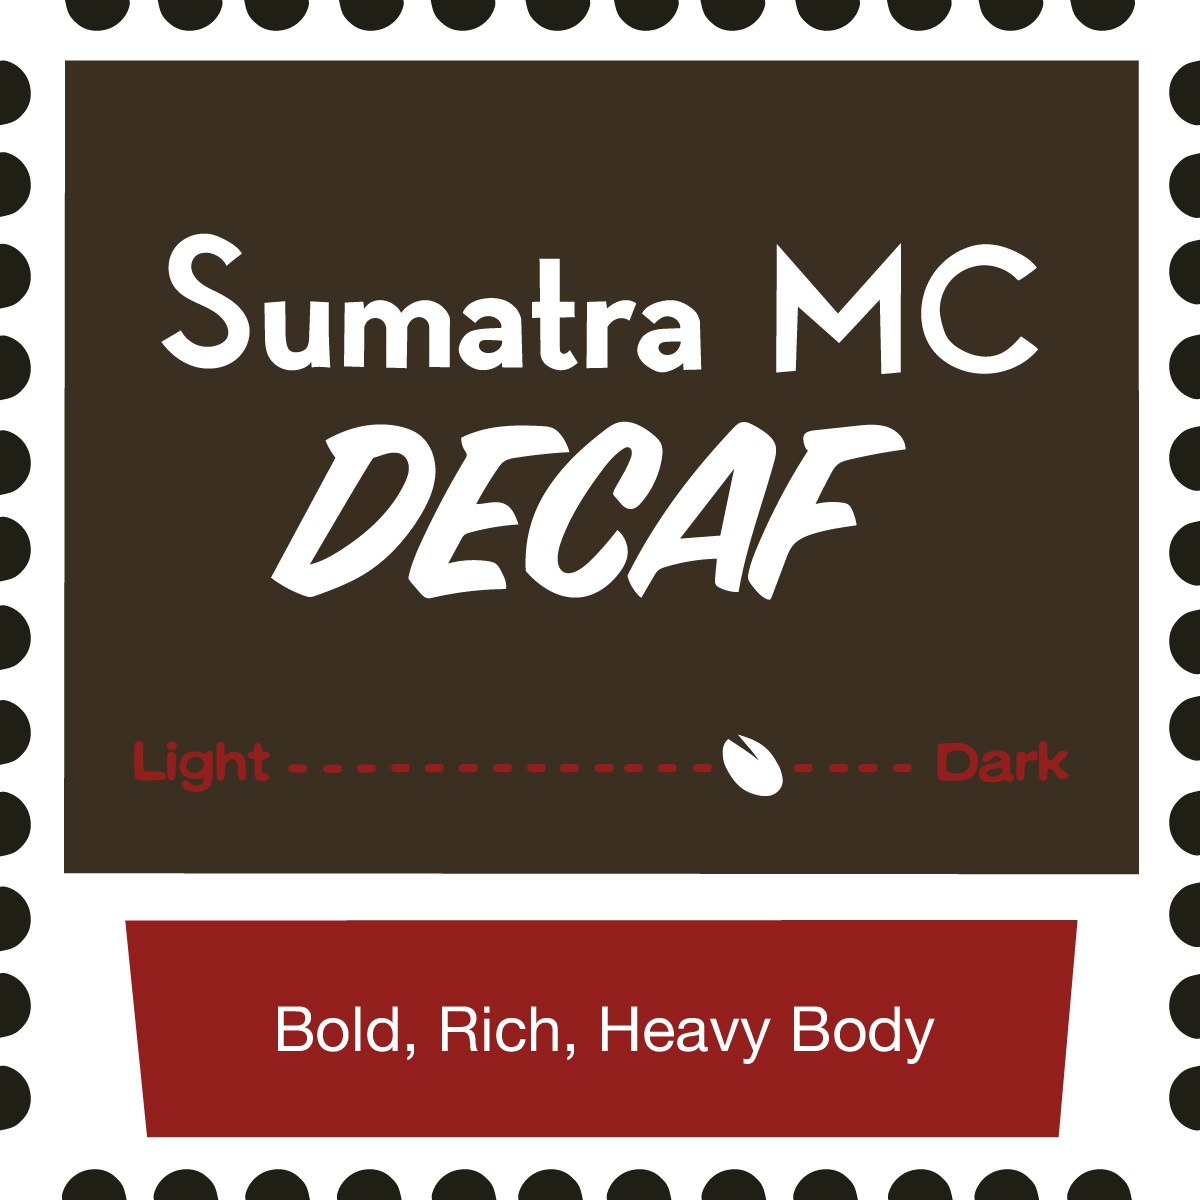 Sumatra MC Decaf